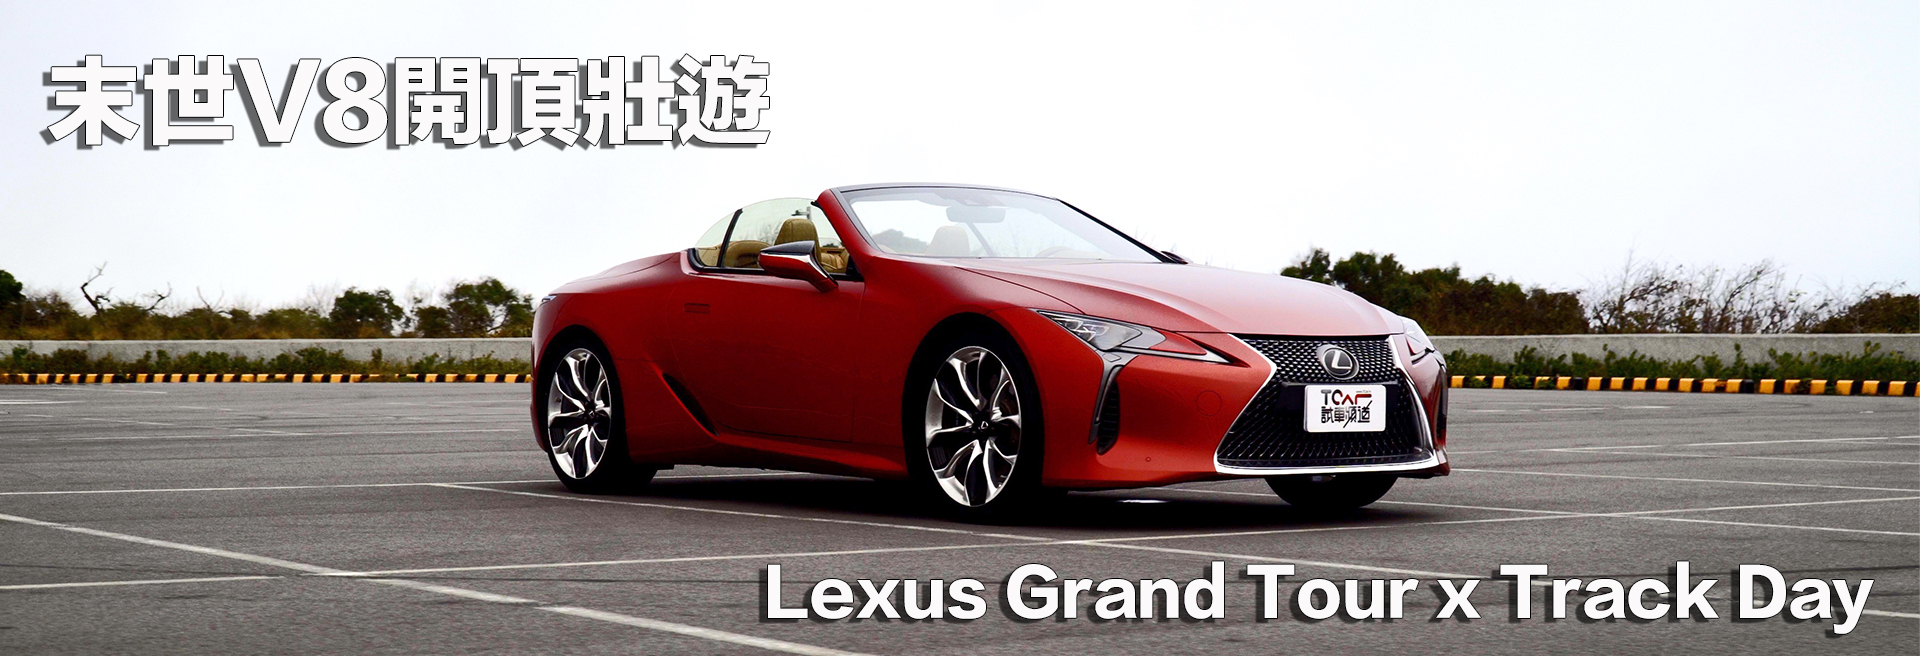 Lexus Grand Tour